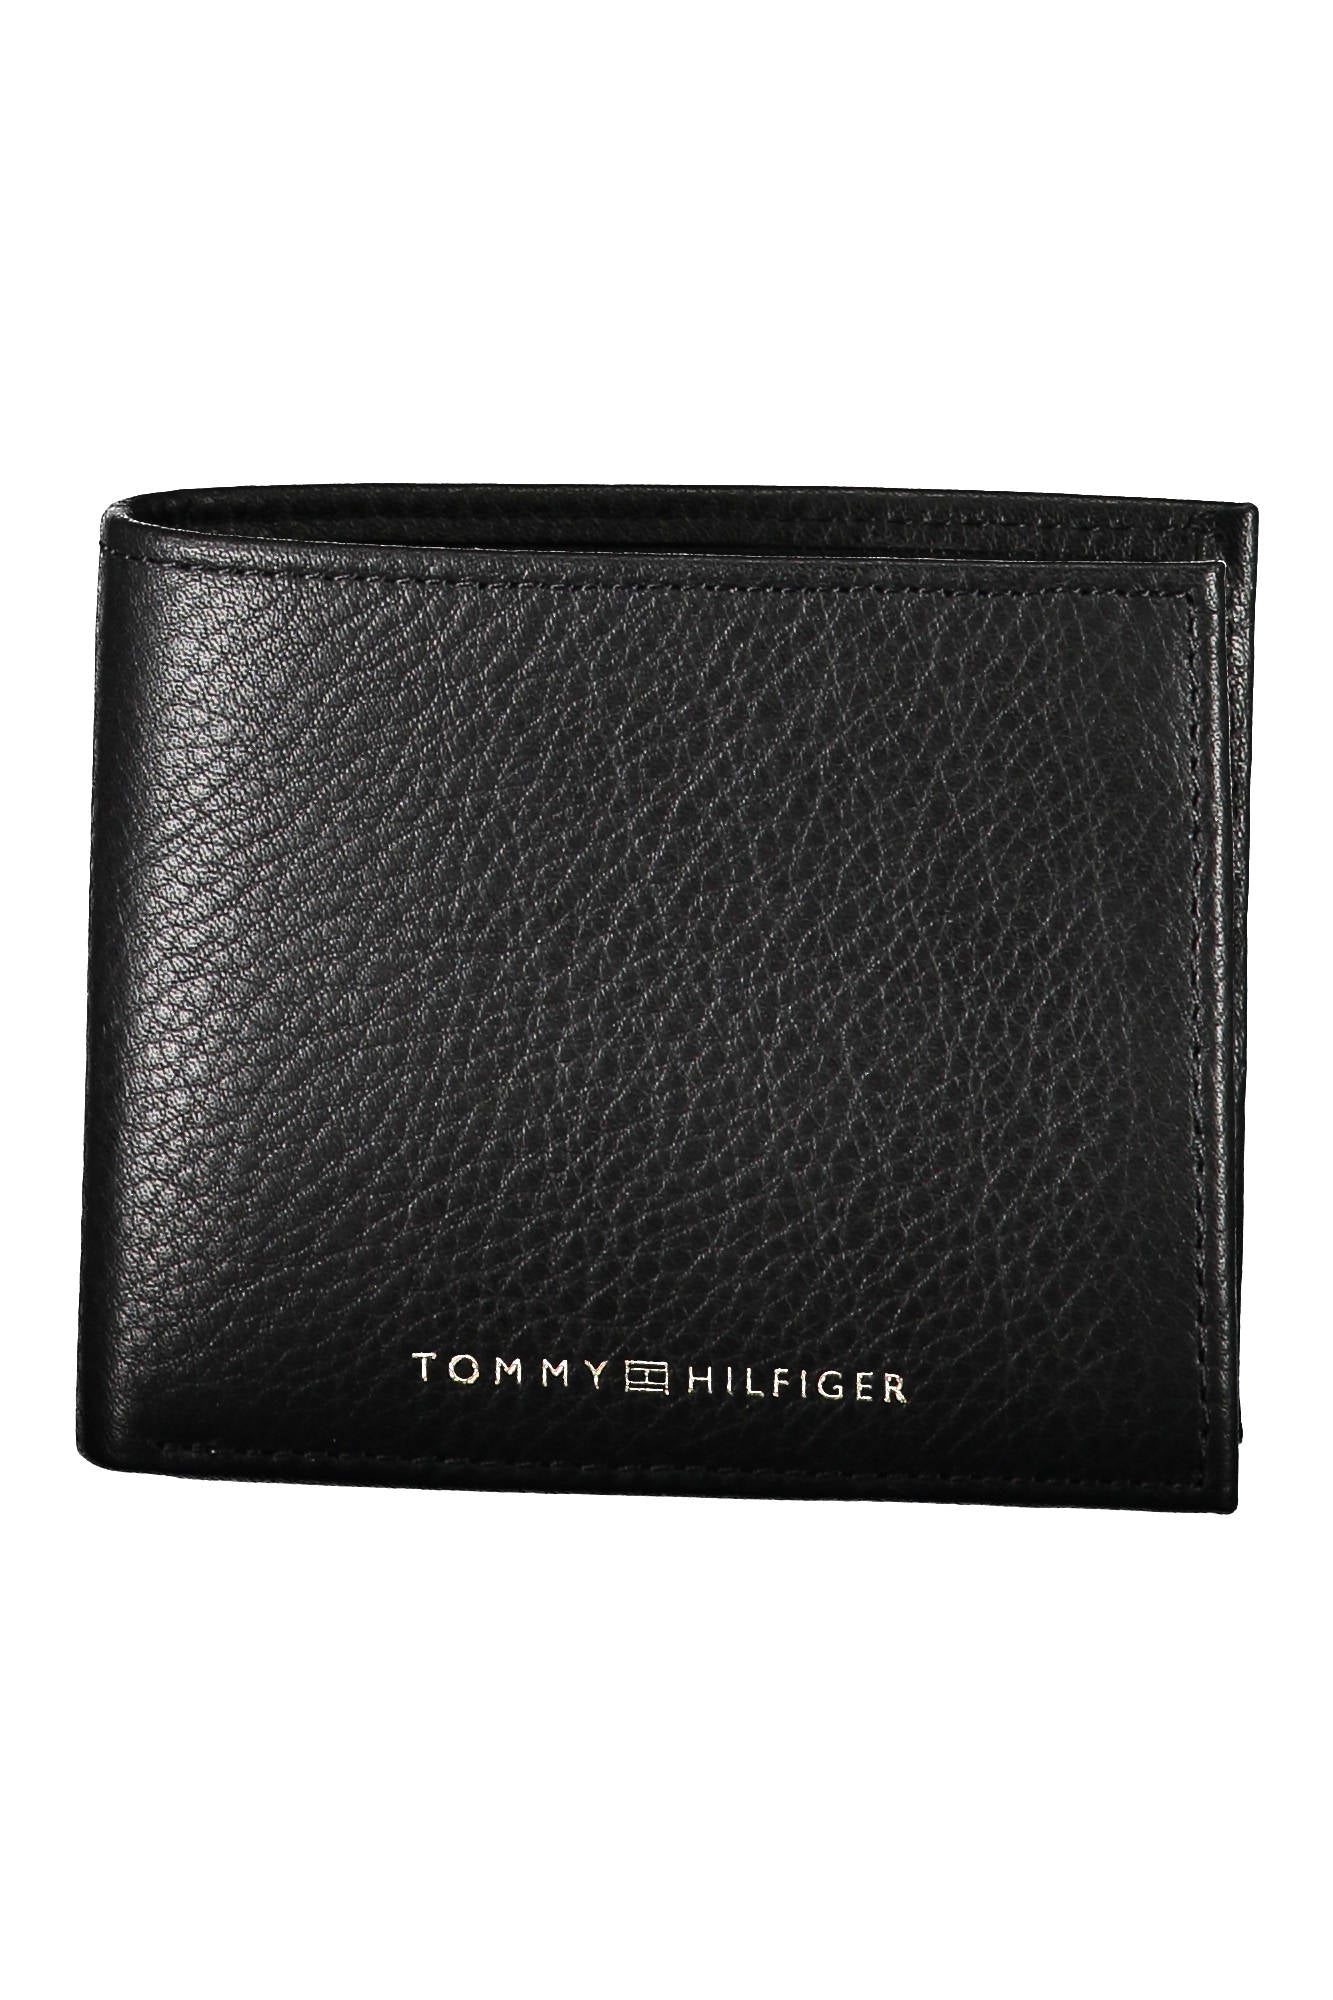 Tommy Hilfiger Black Wallet - Fizigo